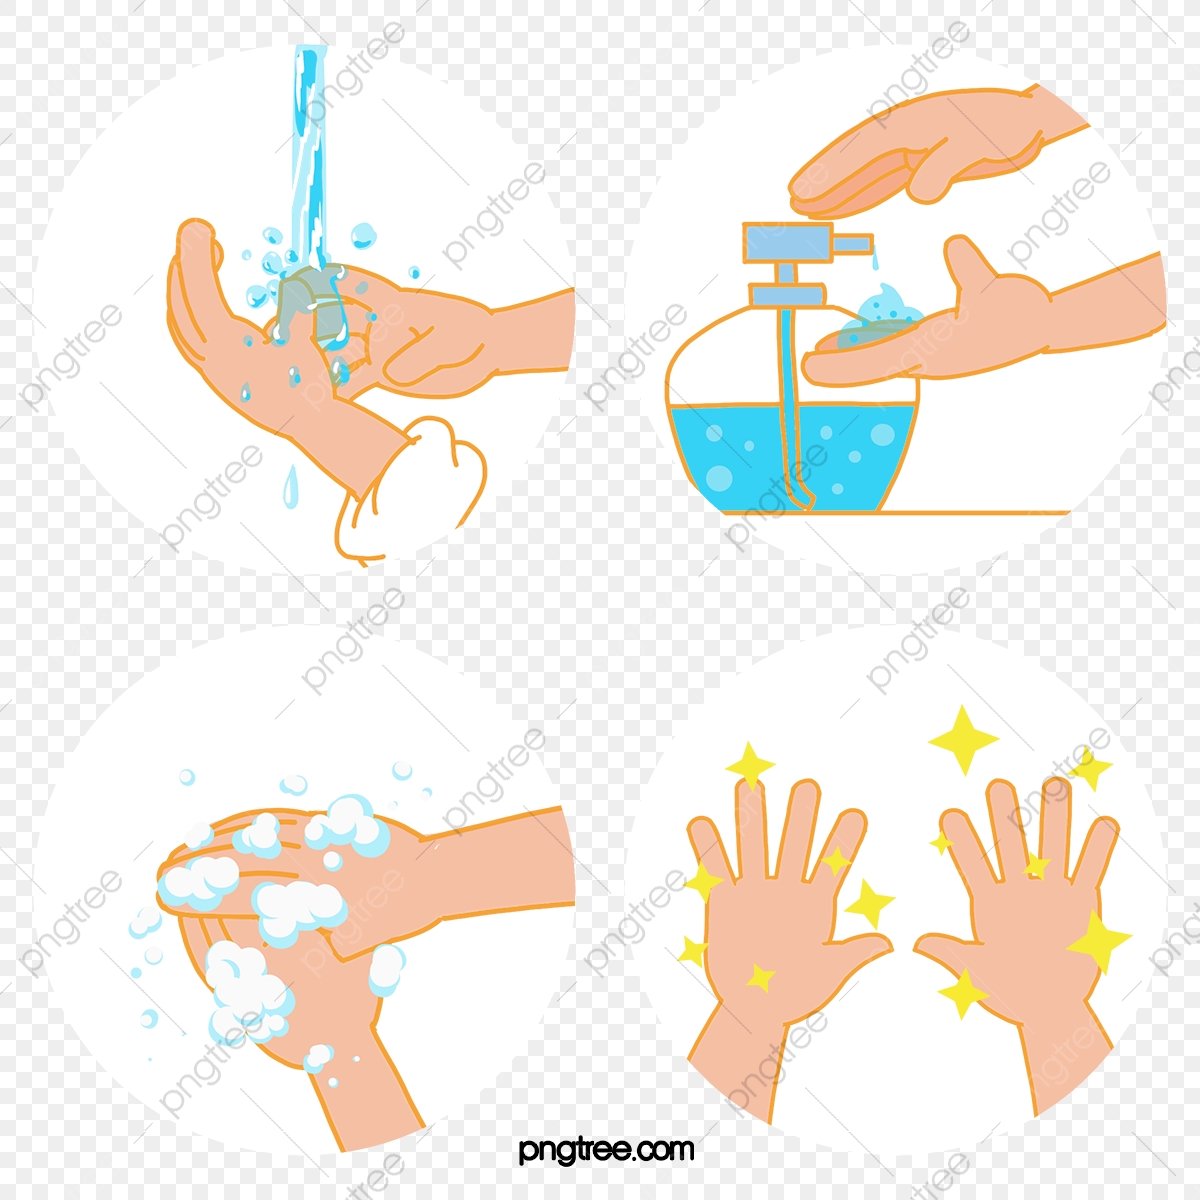 Washing Hands Png, Transparen